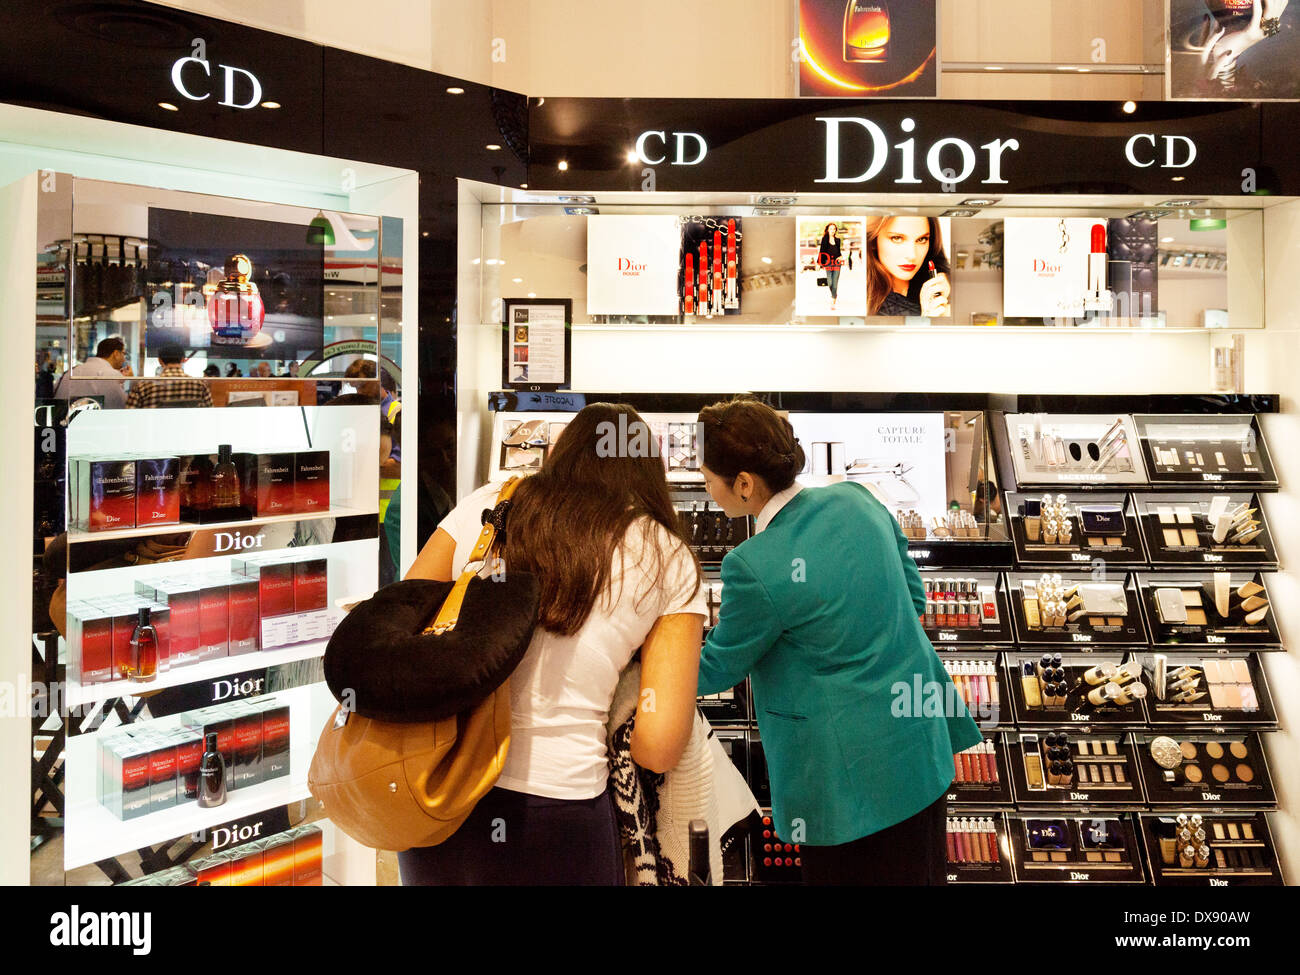 Woman buying Dior cosmetics, Duty Free shop, Dubai airport departure lounge, UAE, United Arab Emirates Middle East Stock Photo